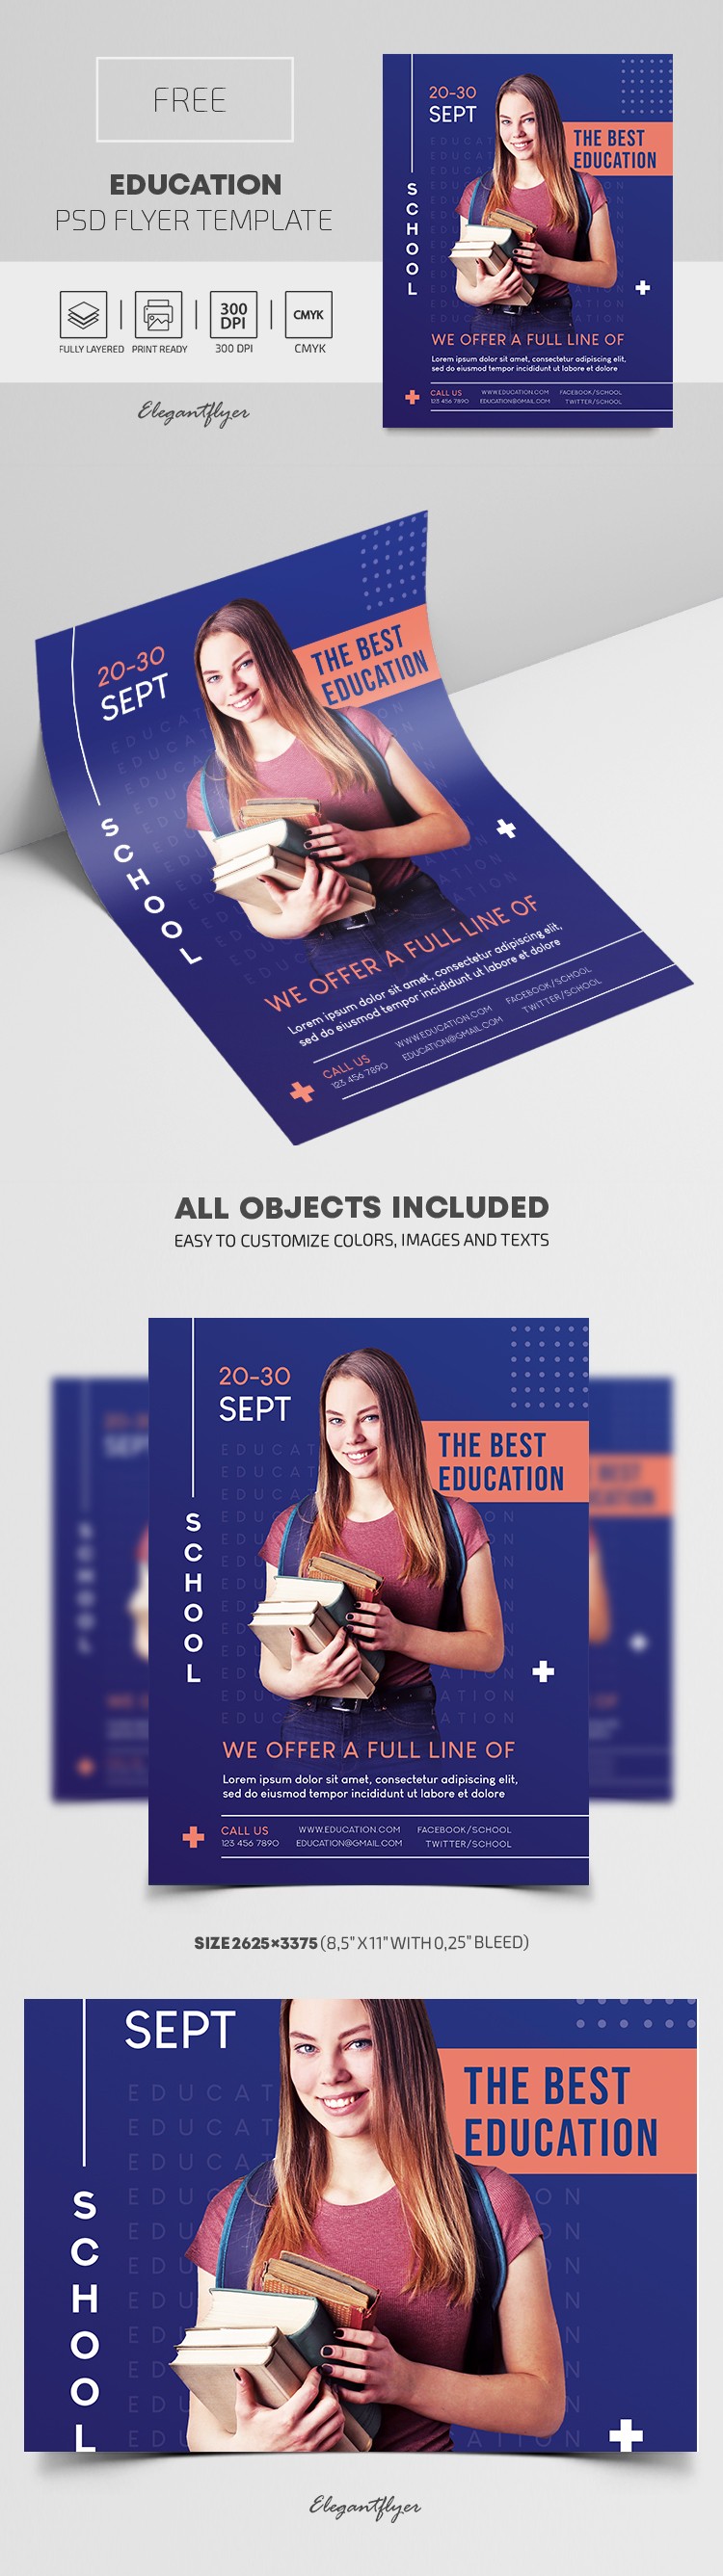 Education Flyer by ElegantFlyer